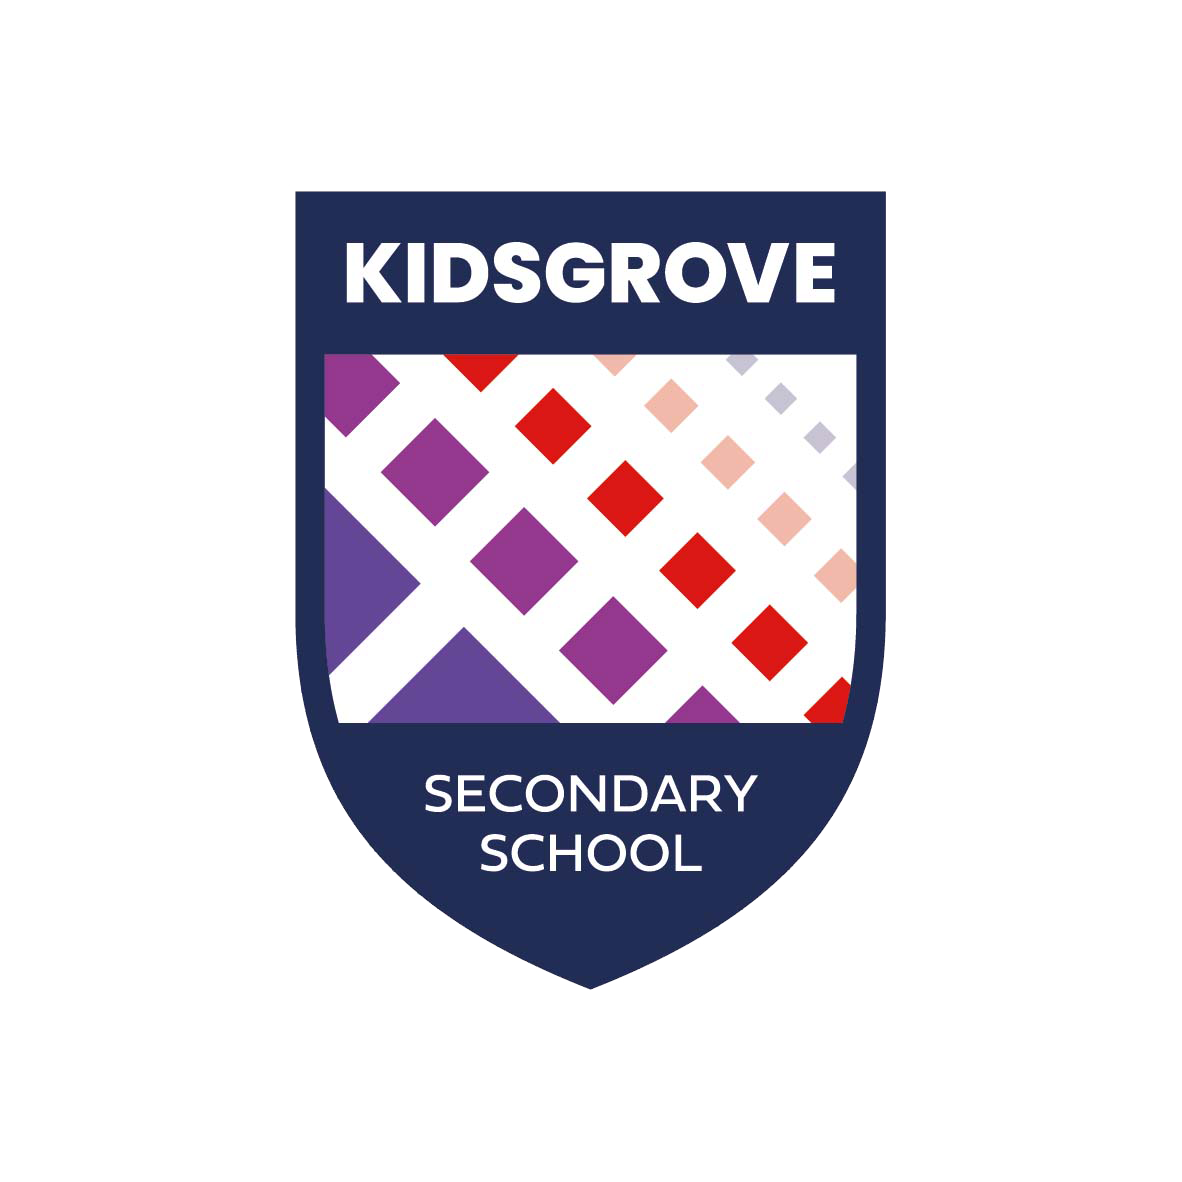 The Kidsgrove Secondary School校徽